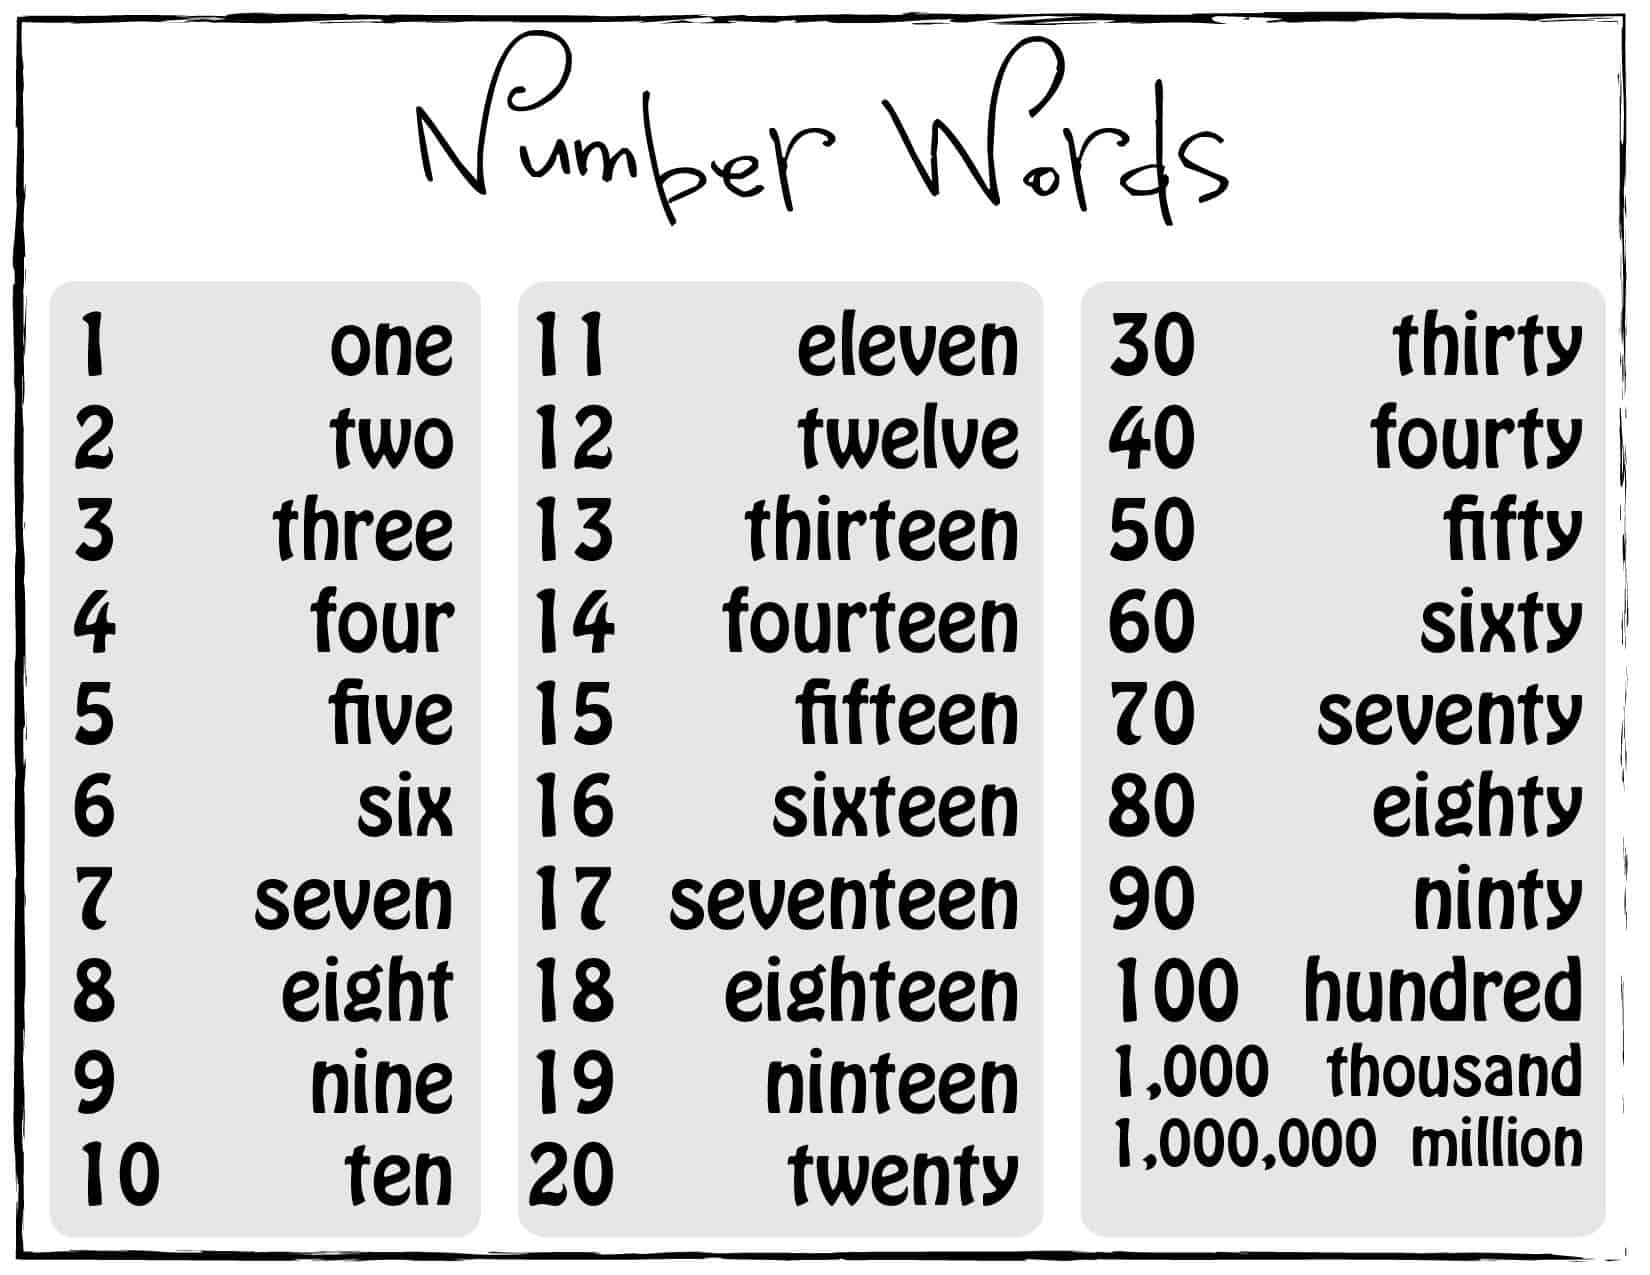 Number Word Spelling Posters { FREE! }